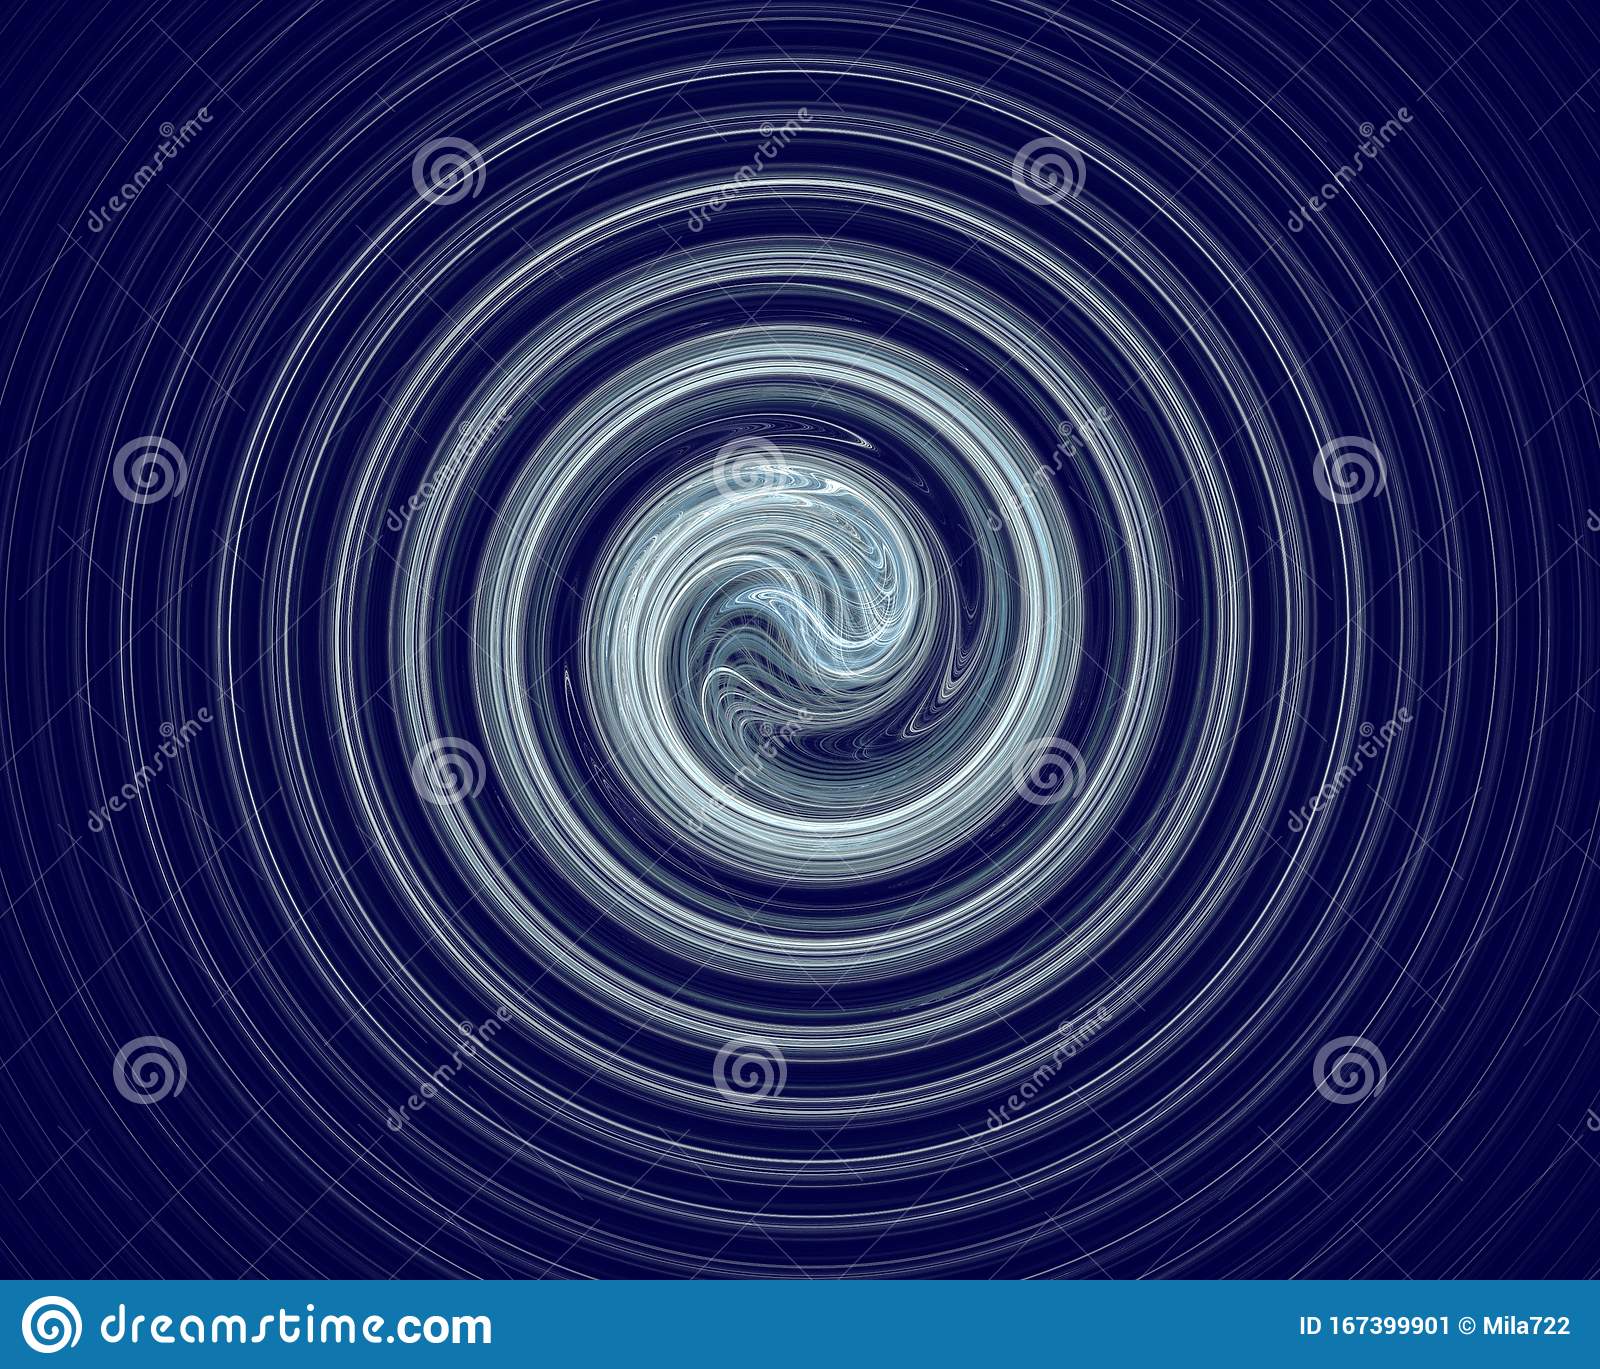 Abstract blue spiral art backdrop or wallpaper on black background stock illustration